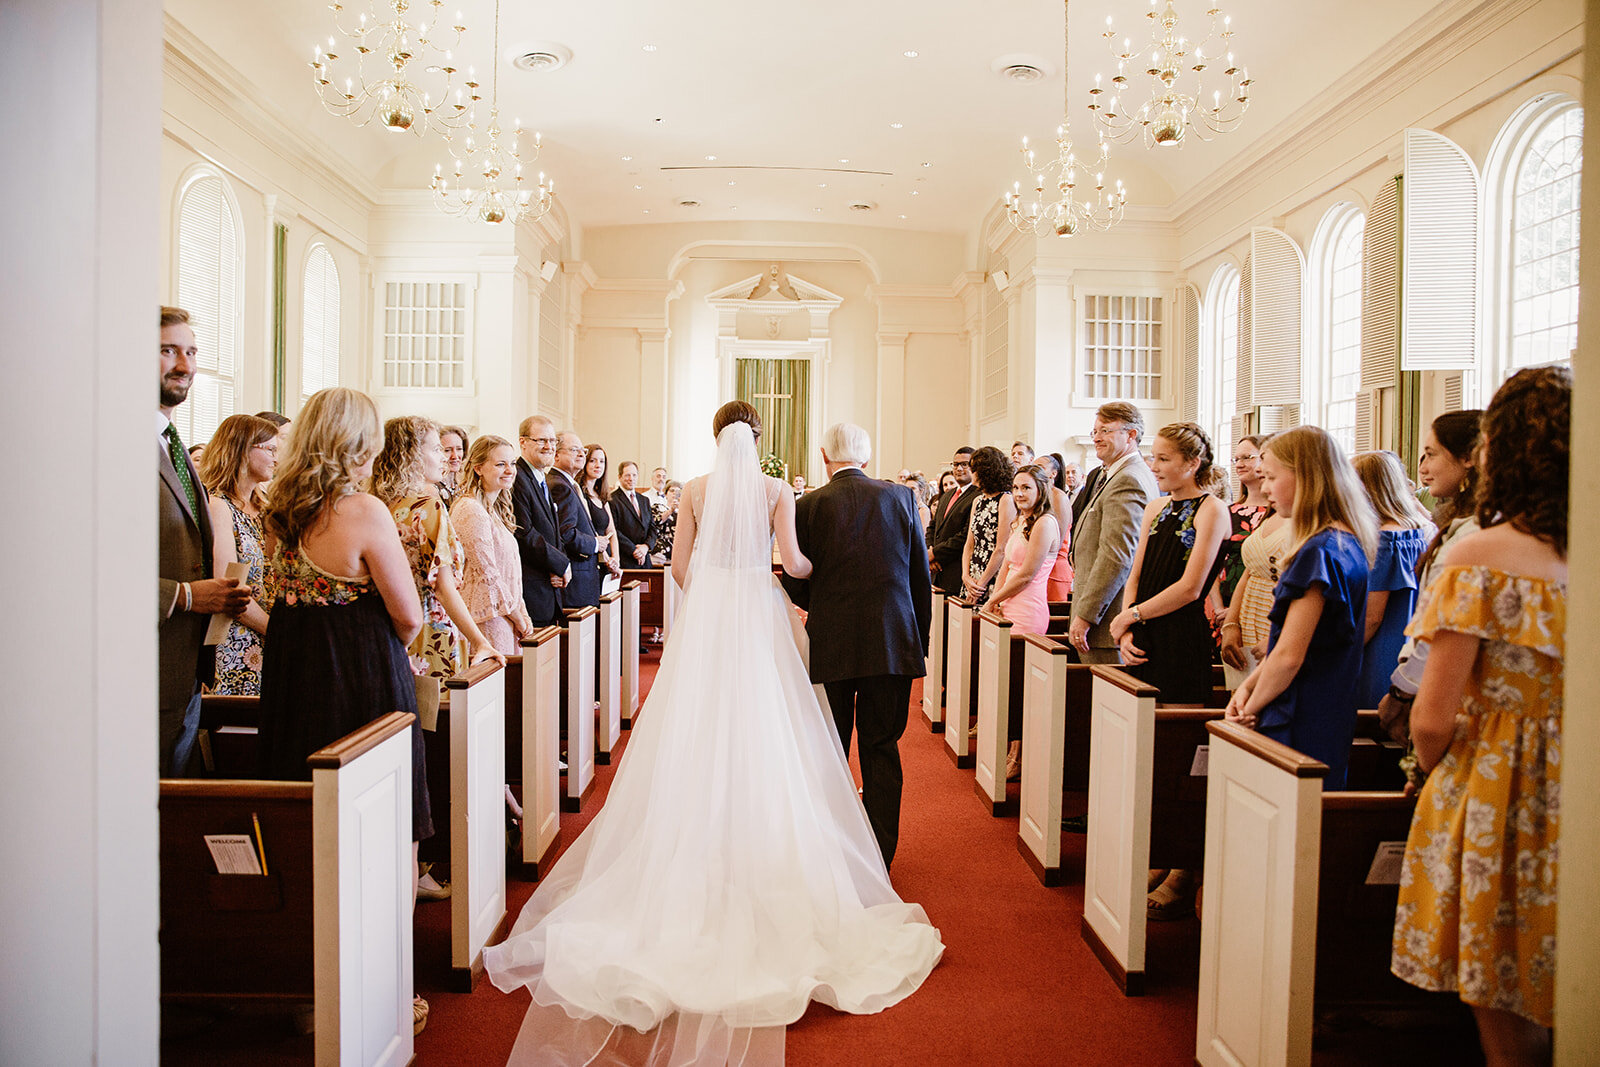  Indoor Church Ceremony | Sarah Mattozzi Photography | Ball Gown Wedding Dress and Black Tux | Outdoor Classic Wedding at Third Church and Veritas School | Richmond Wedding Photographer 